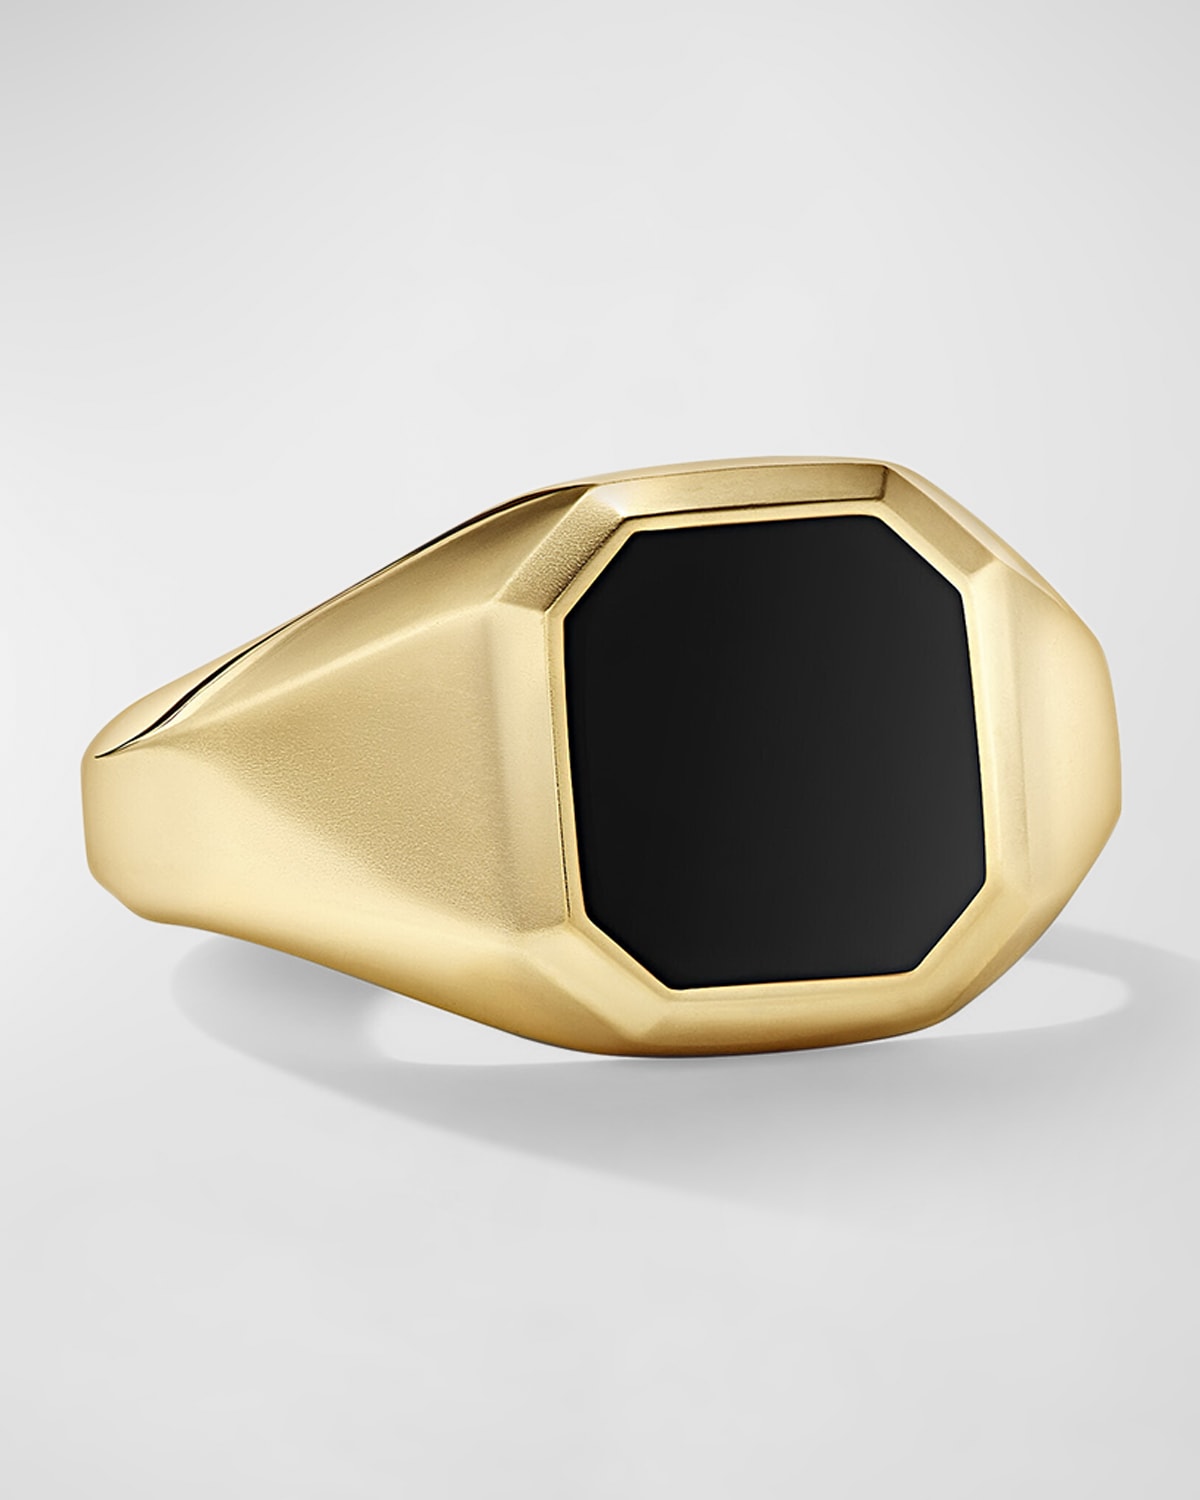 David Yurman Men's Streamline Signet Ring in 18K Gold with Gemstone, 14mm